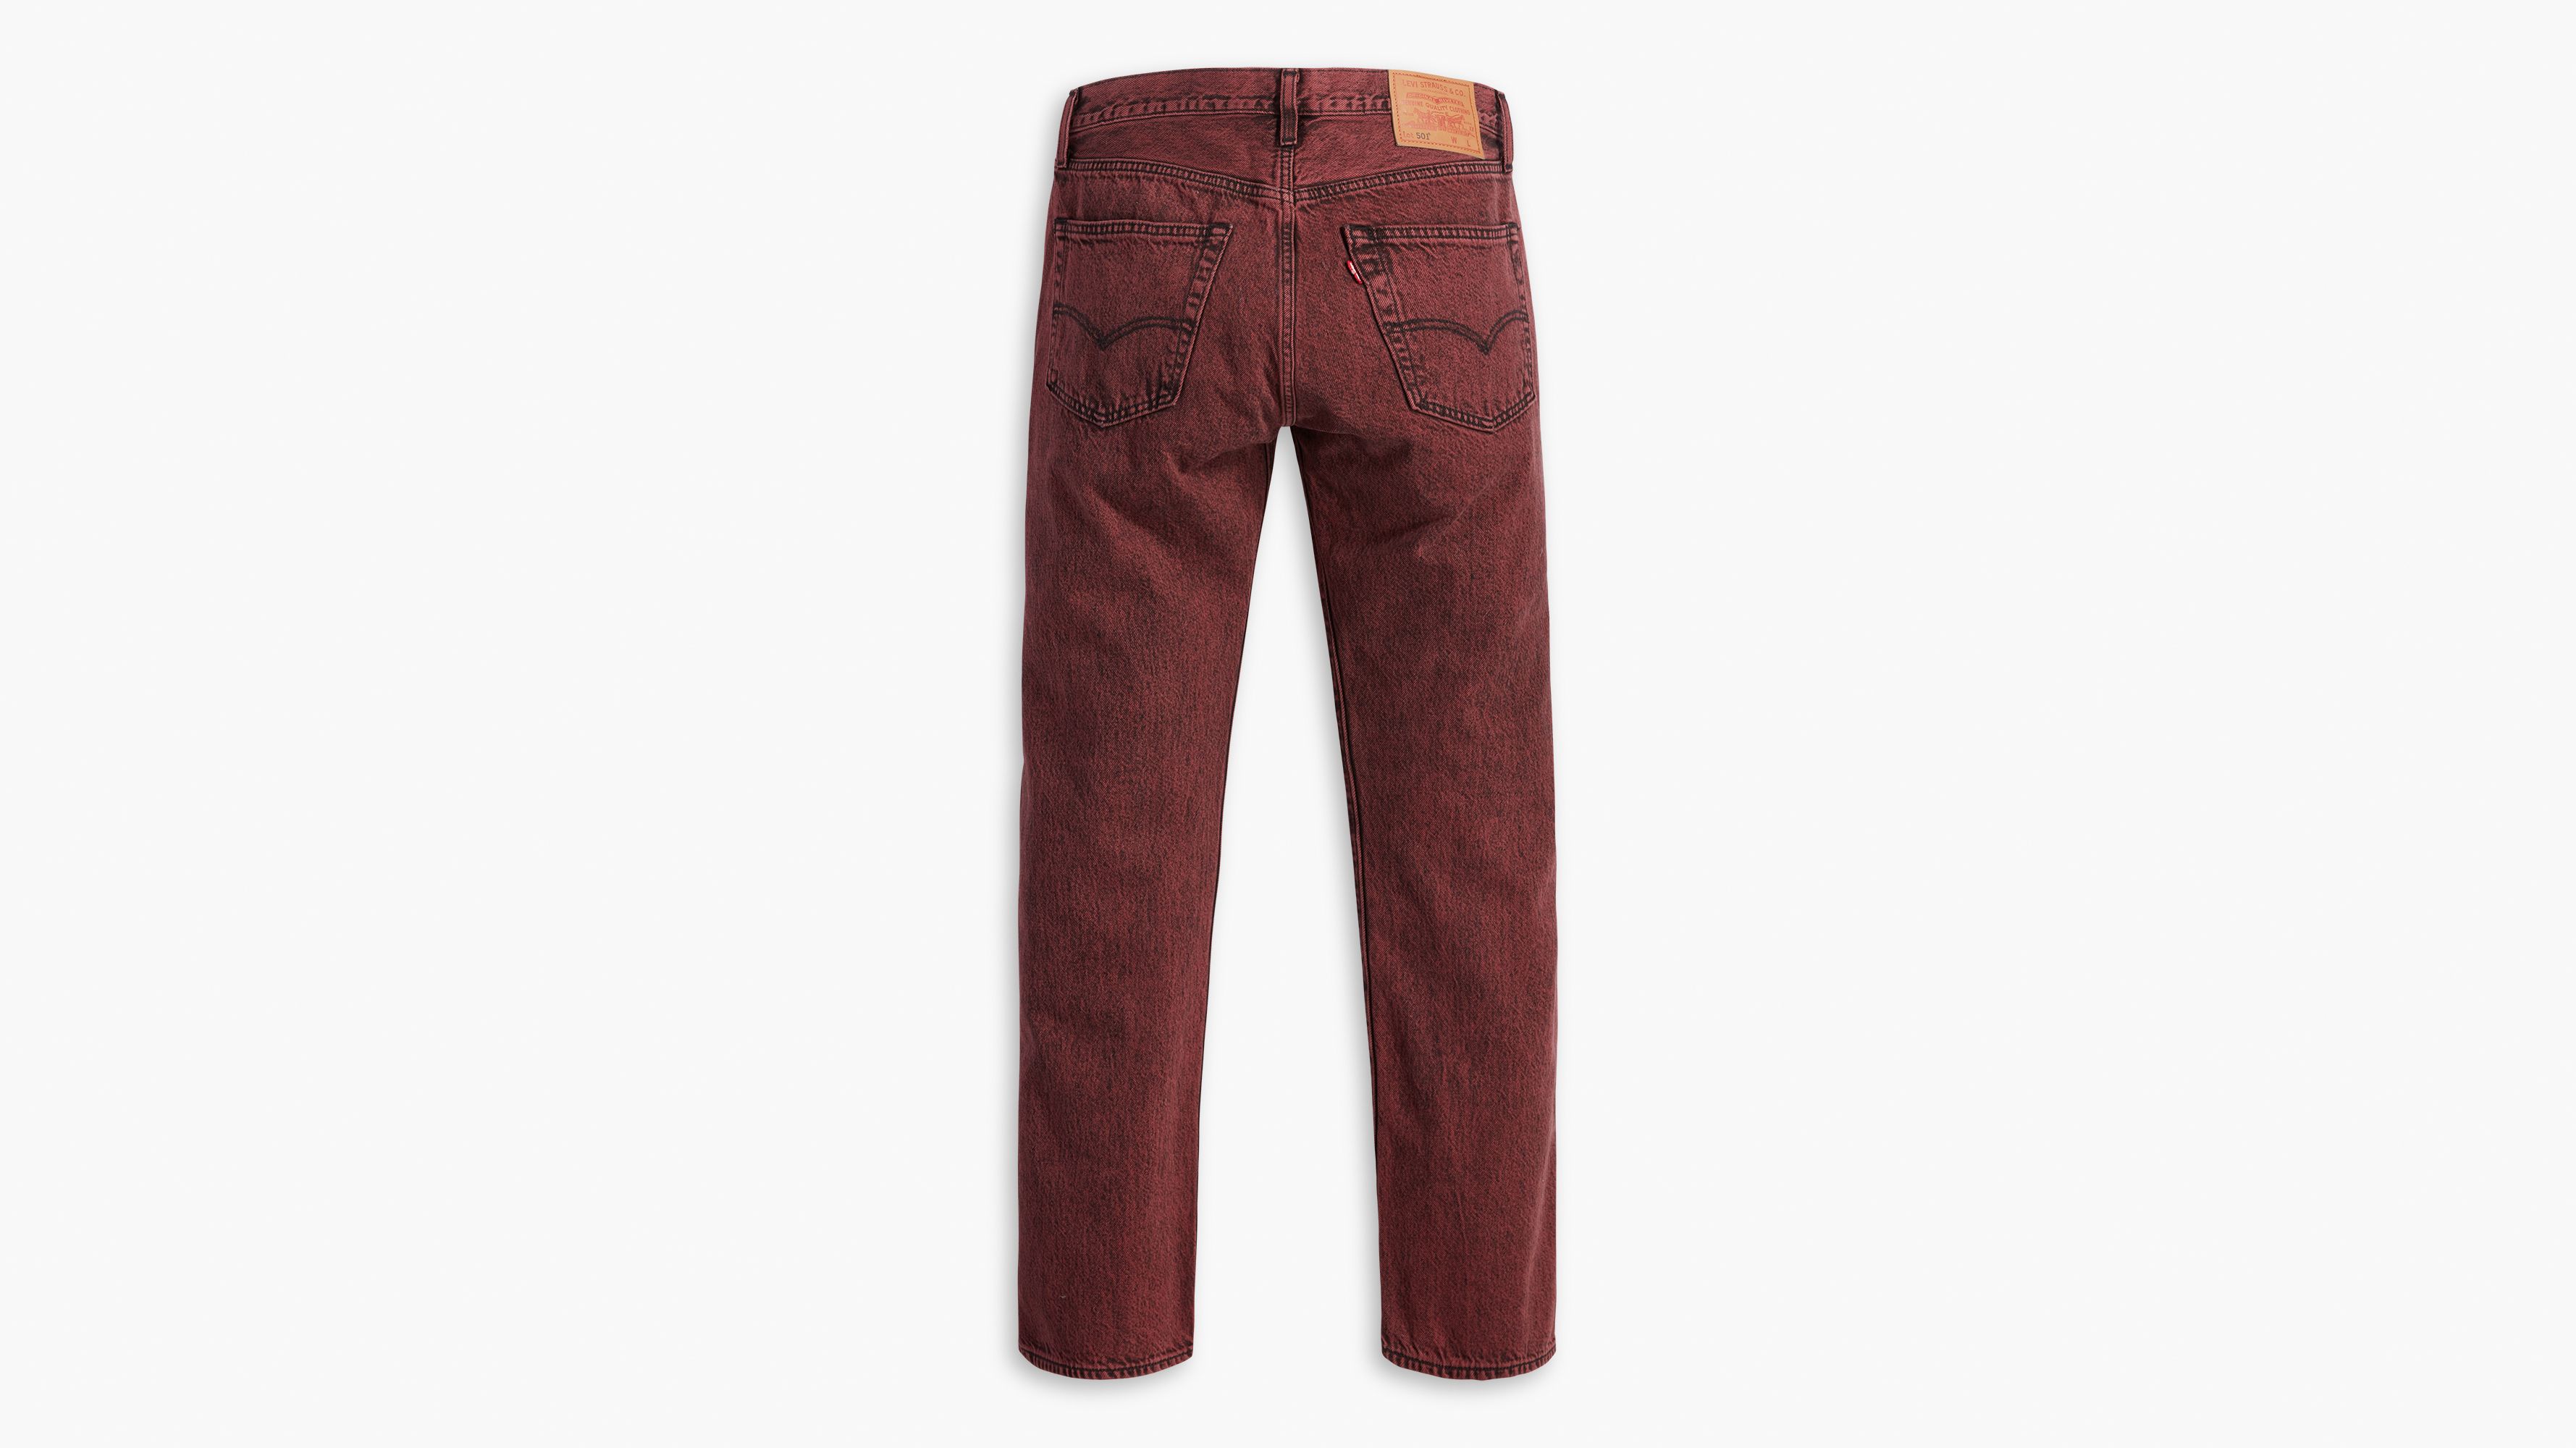 Denim Plain 100% Original Levi''S Jeans at Rs 750/piece in